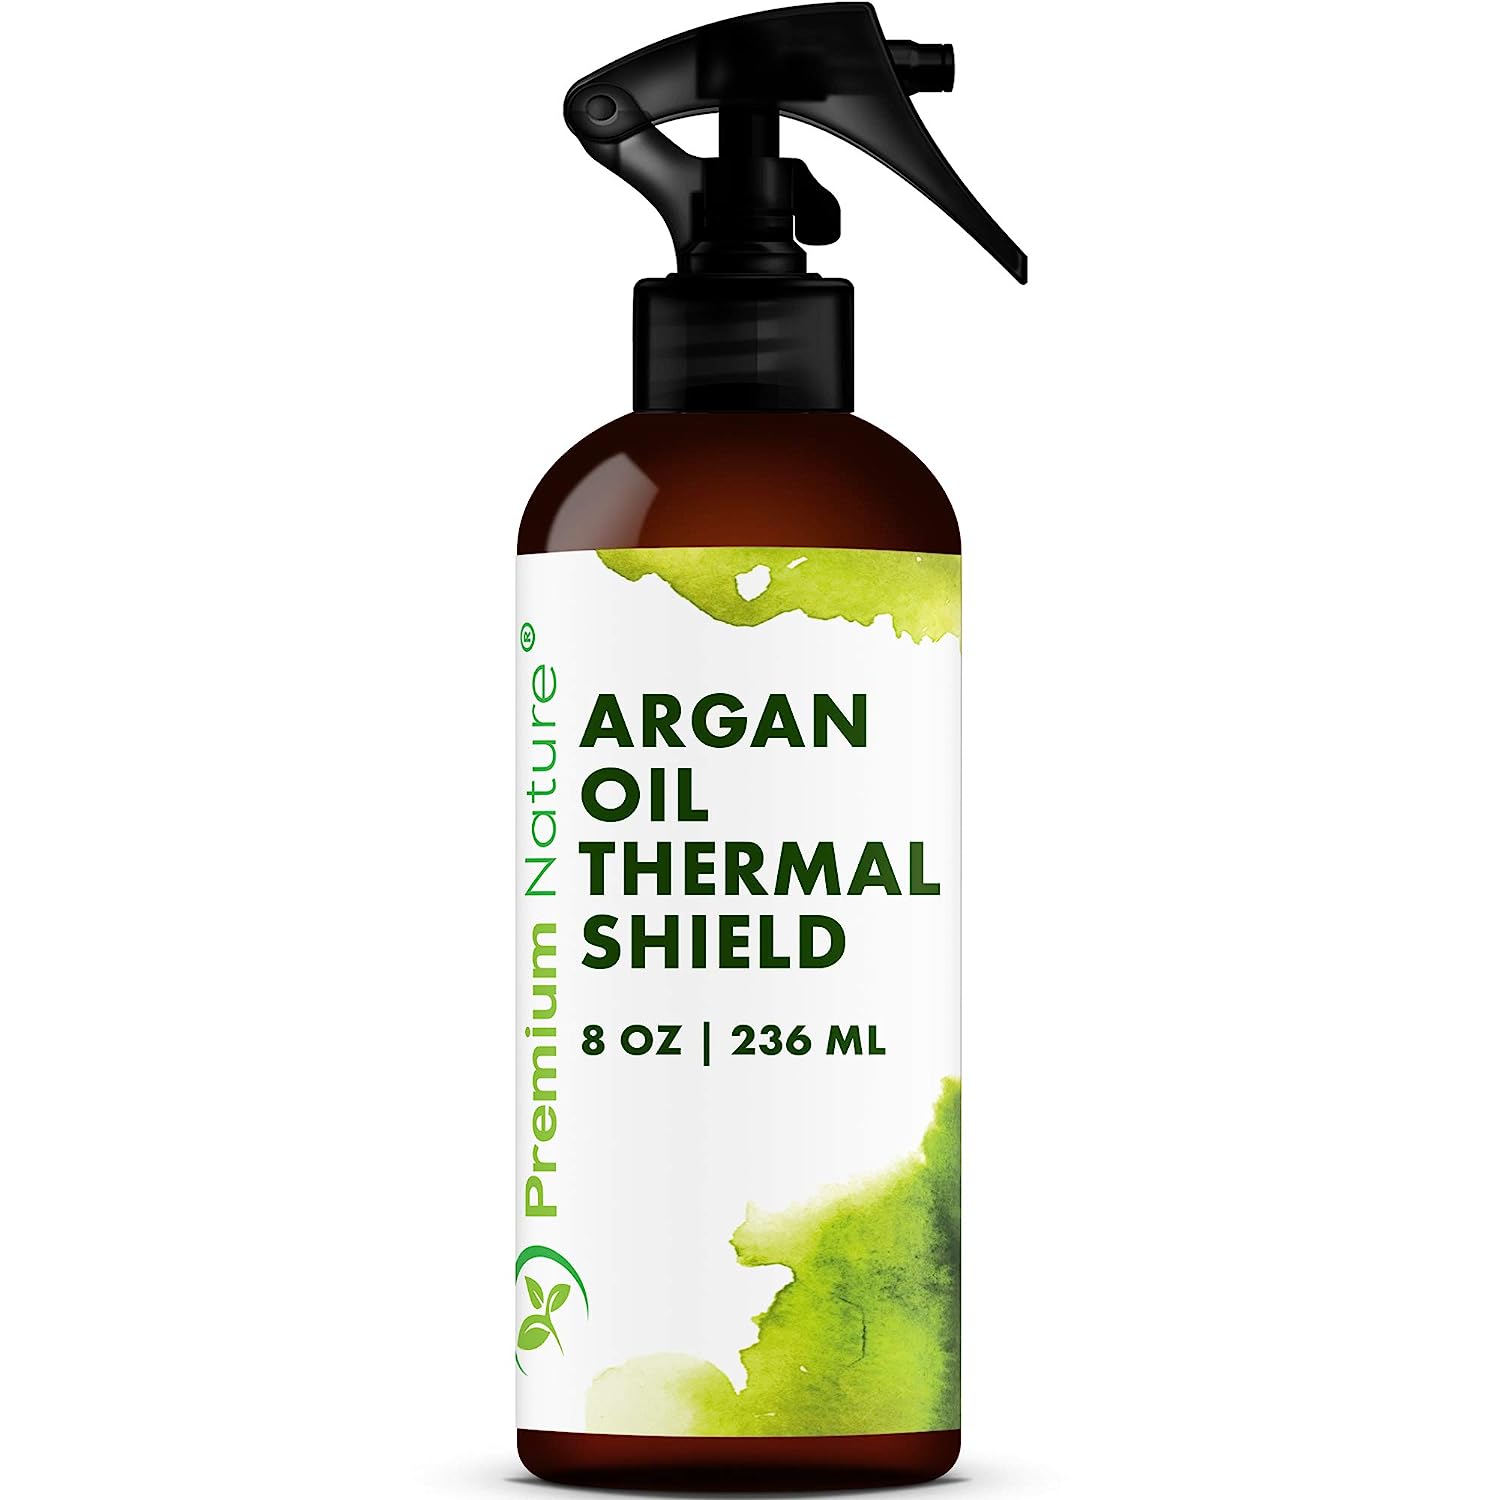 Argan Oil Hair Protectant Spray from Heat Flat Iron [...]